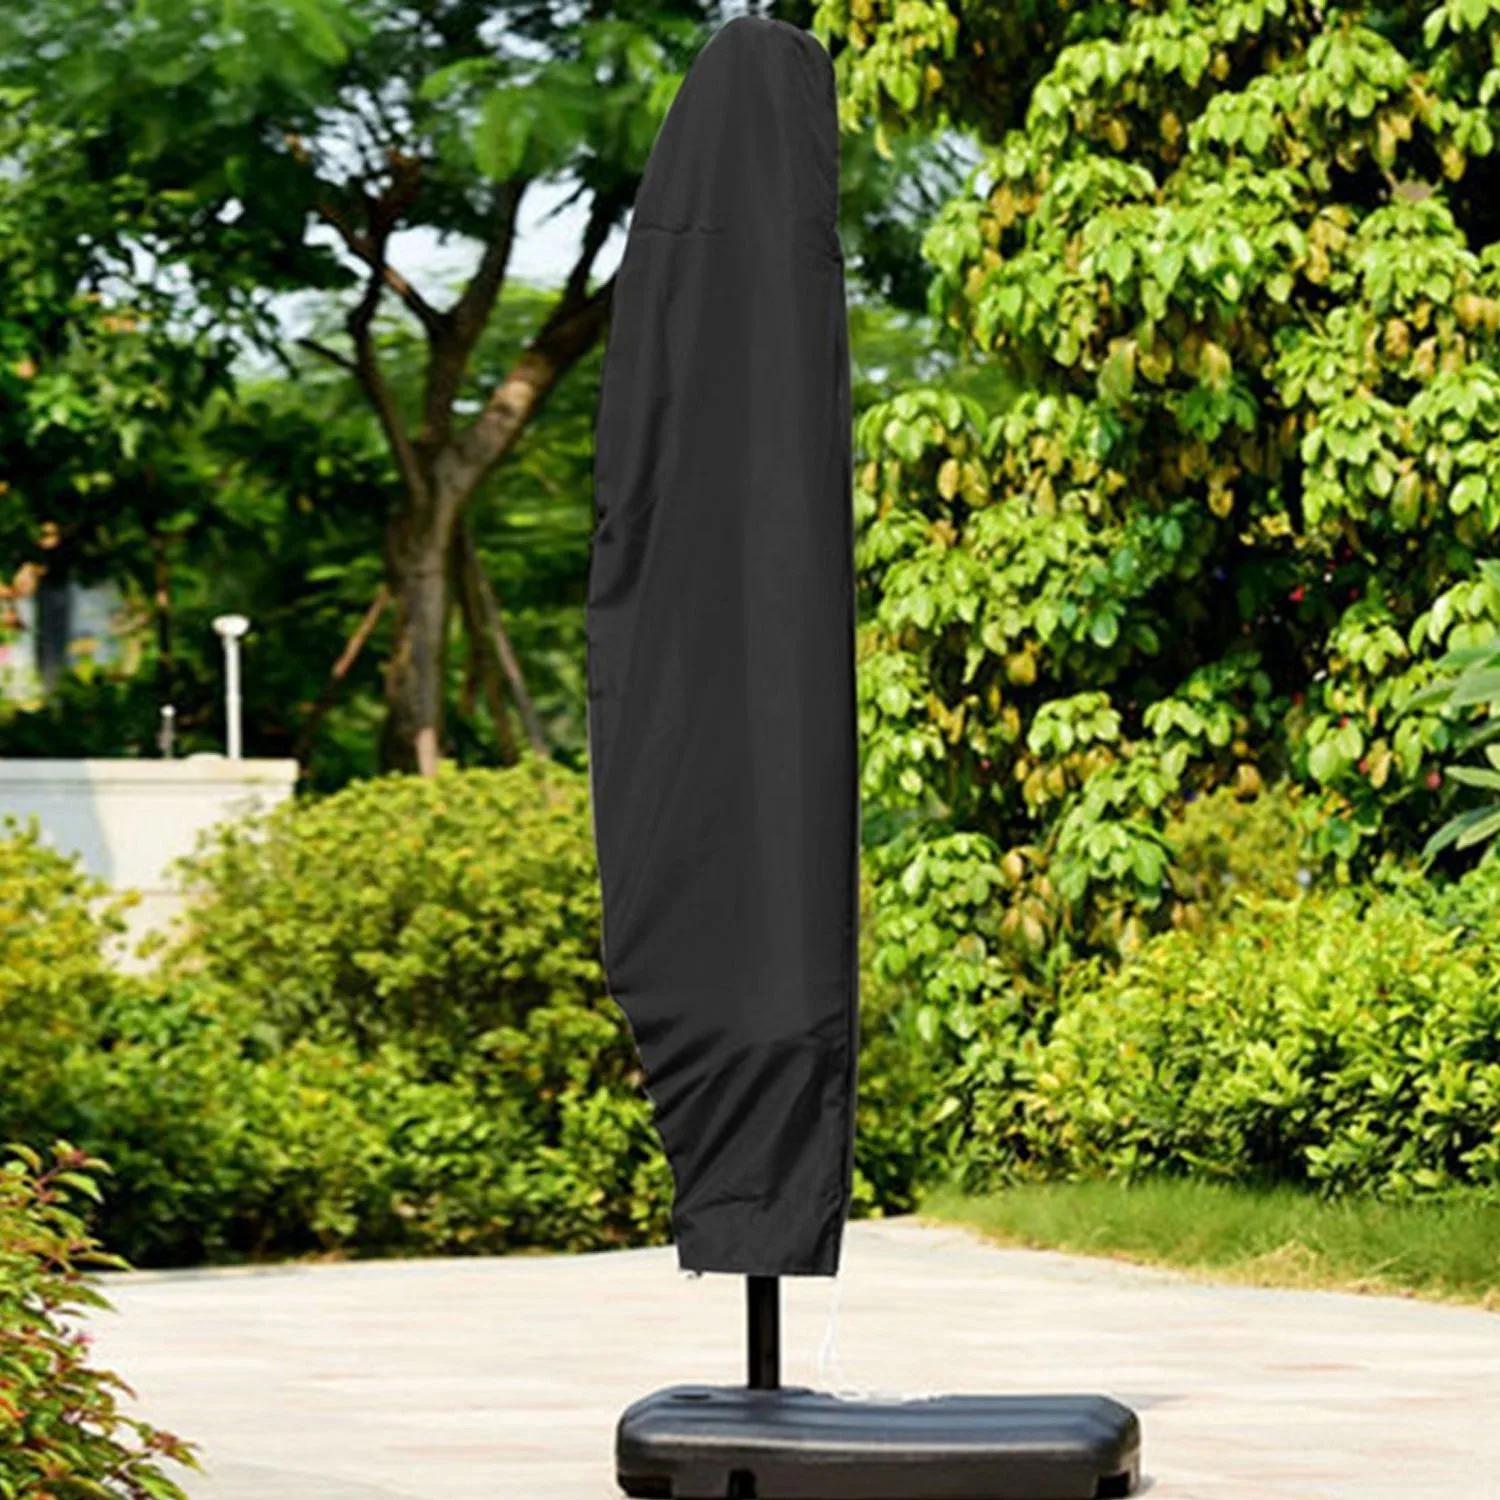 

265cm Dustproof Waterpoof 210D Oxford Outdoor Parasol Patio Umbrella Protective Cover with Bag for Home Garden Backyard Balcony